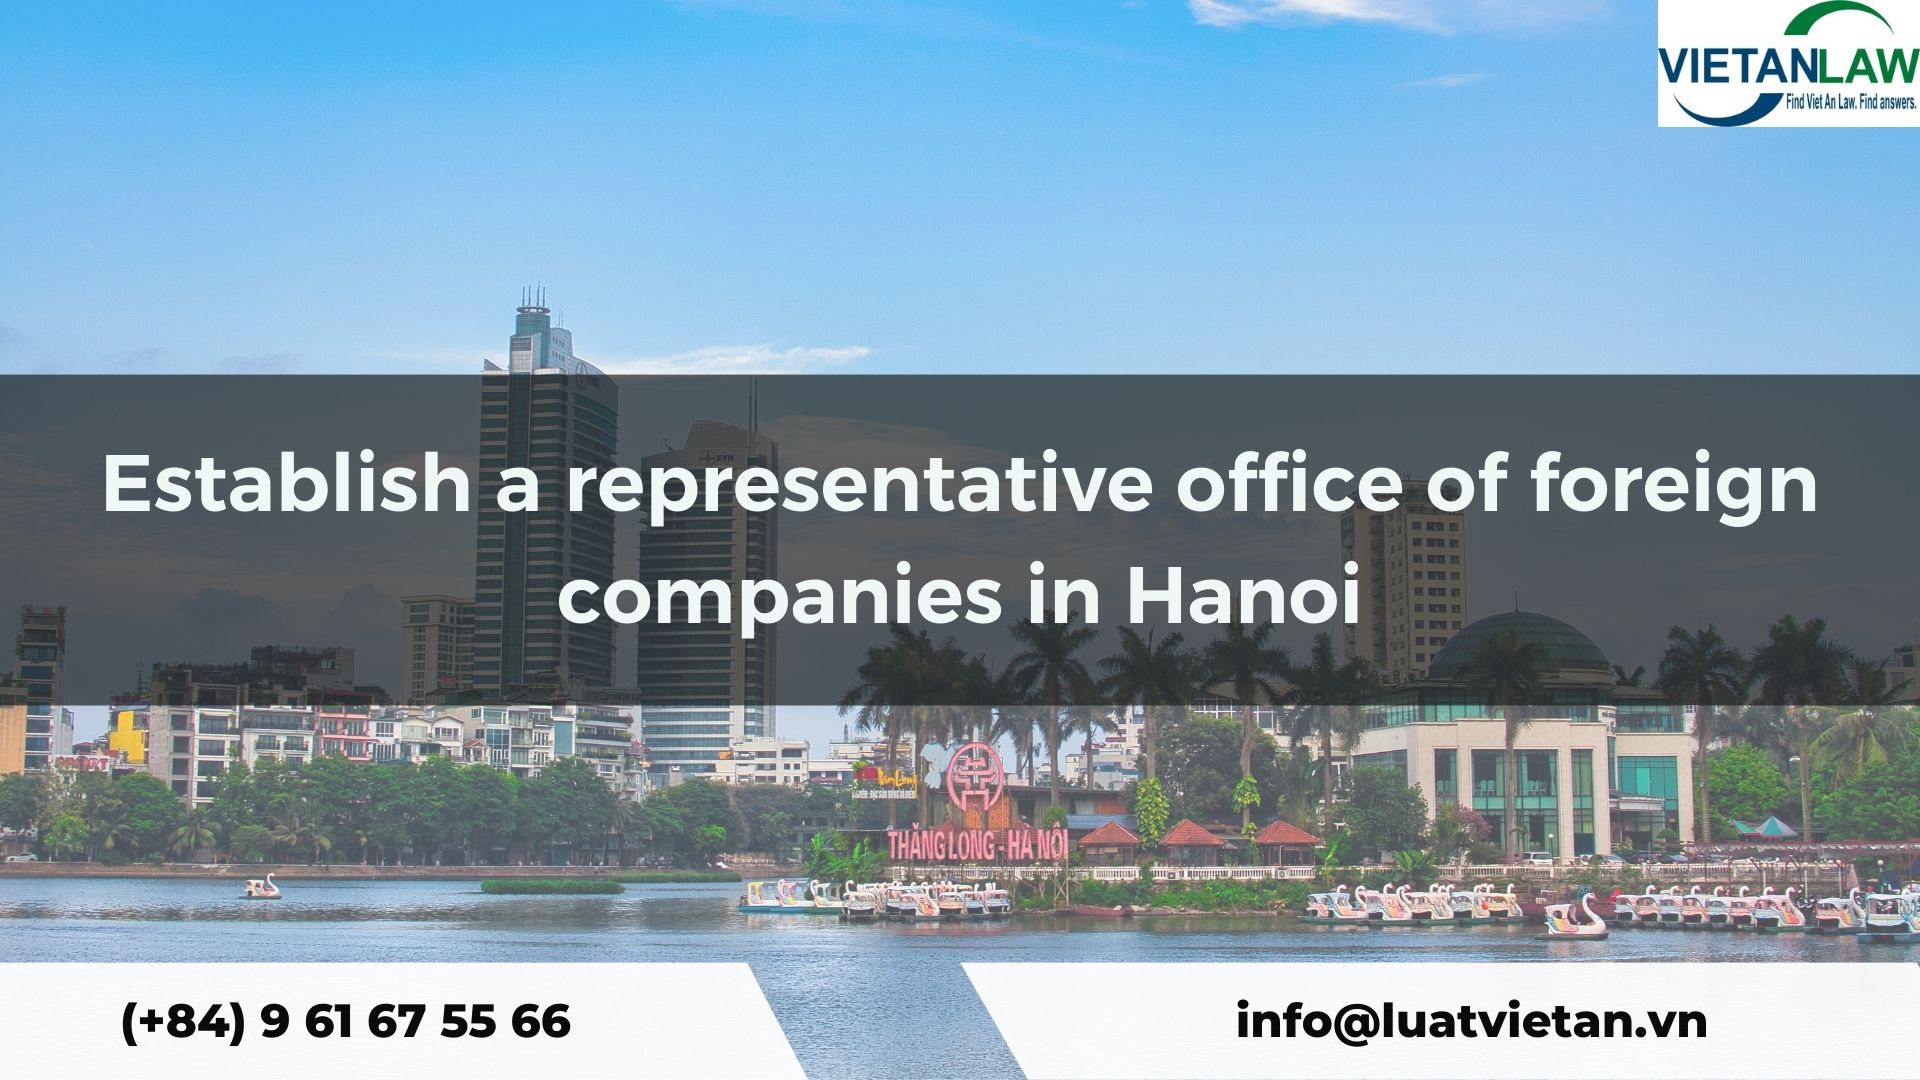 Establish a representative office of foreign companies in Hanoi